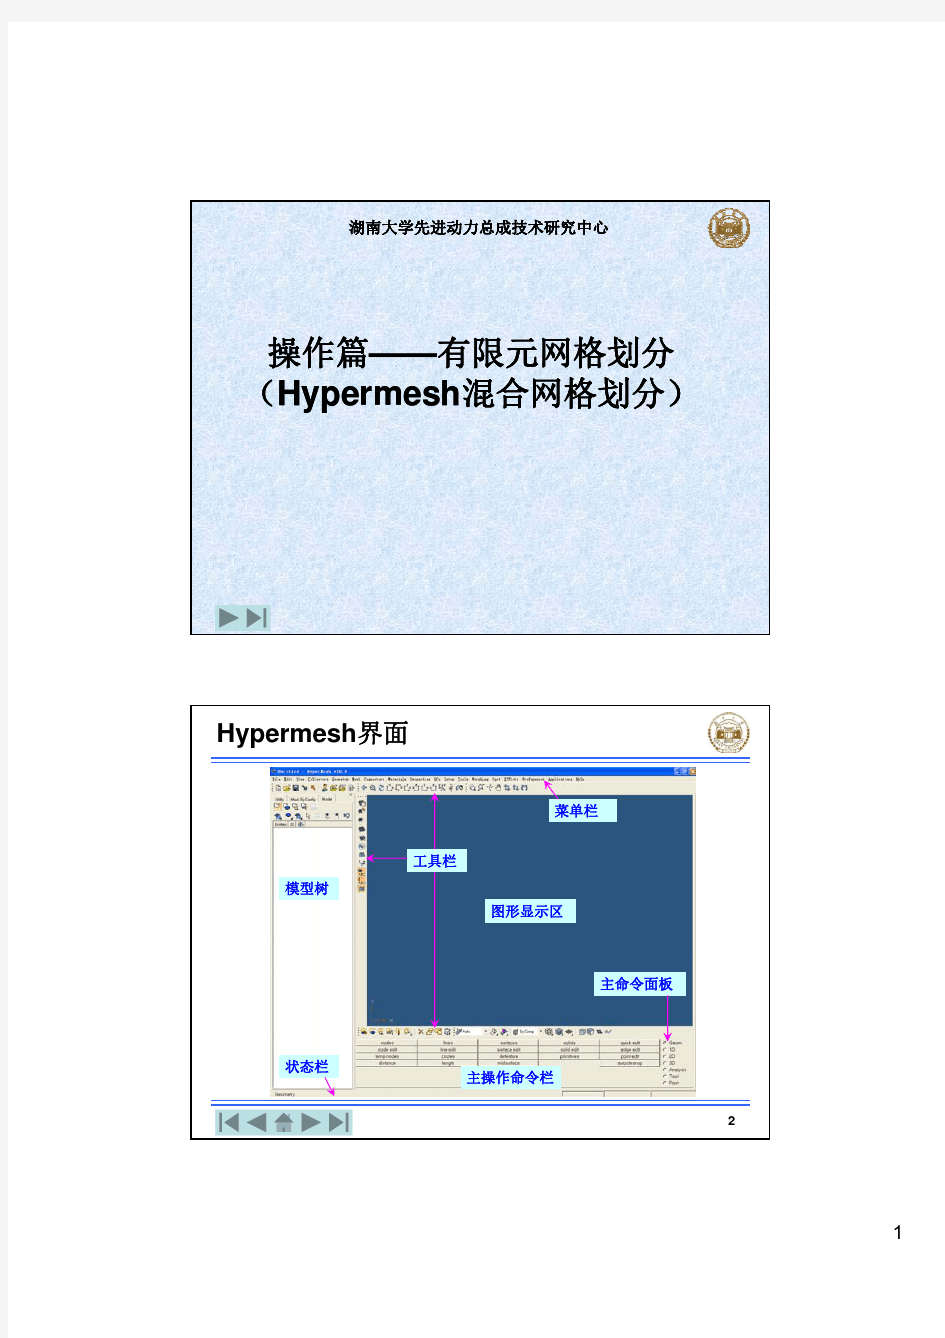 Hypermesh系列之——混合网格划分